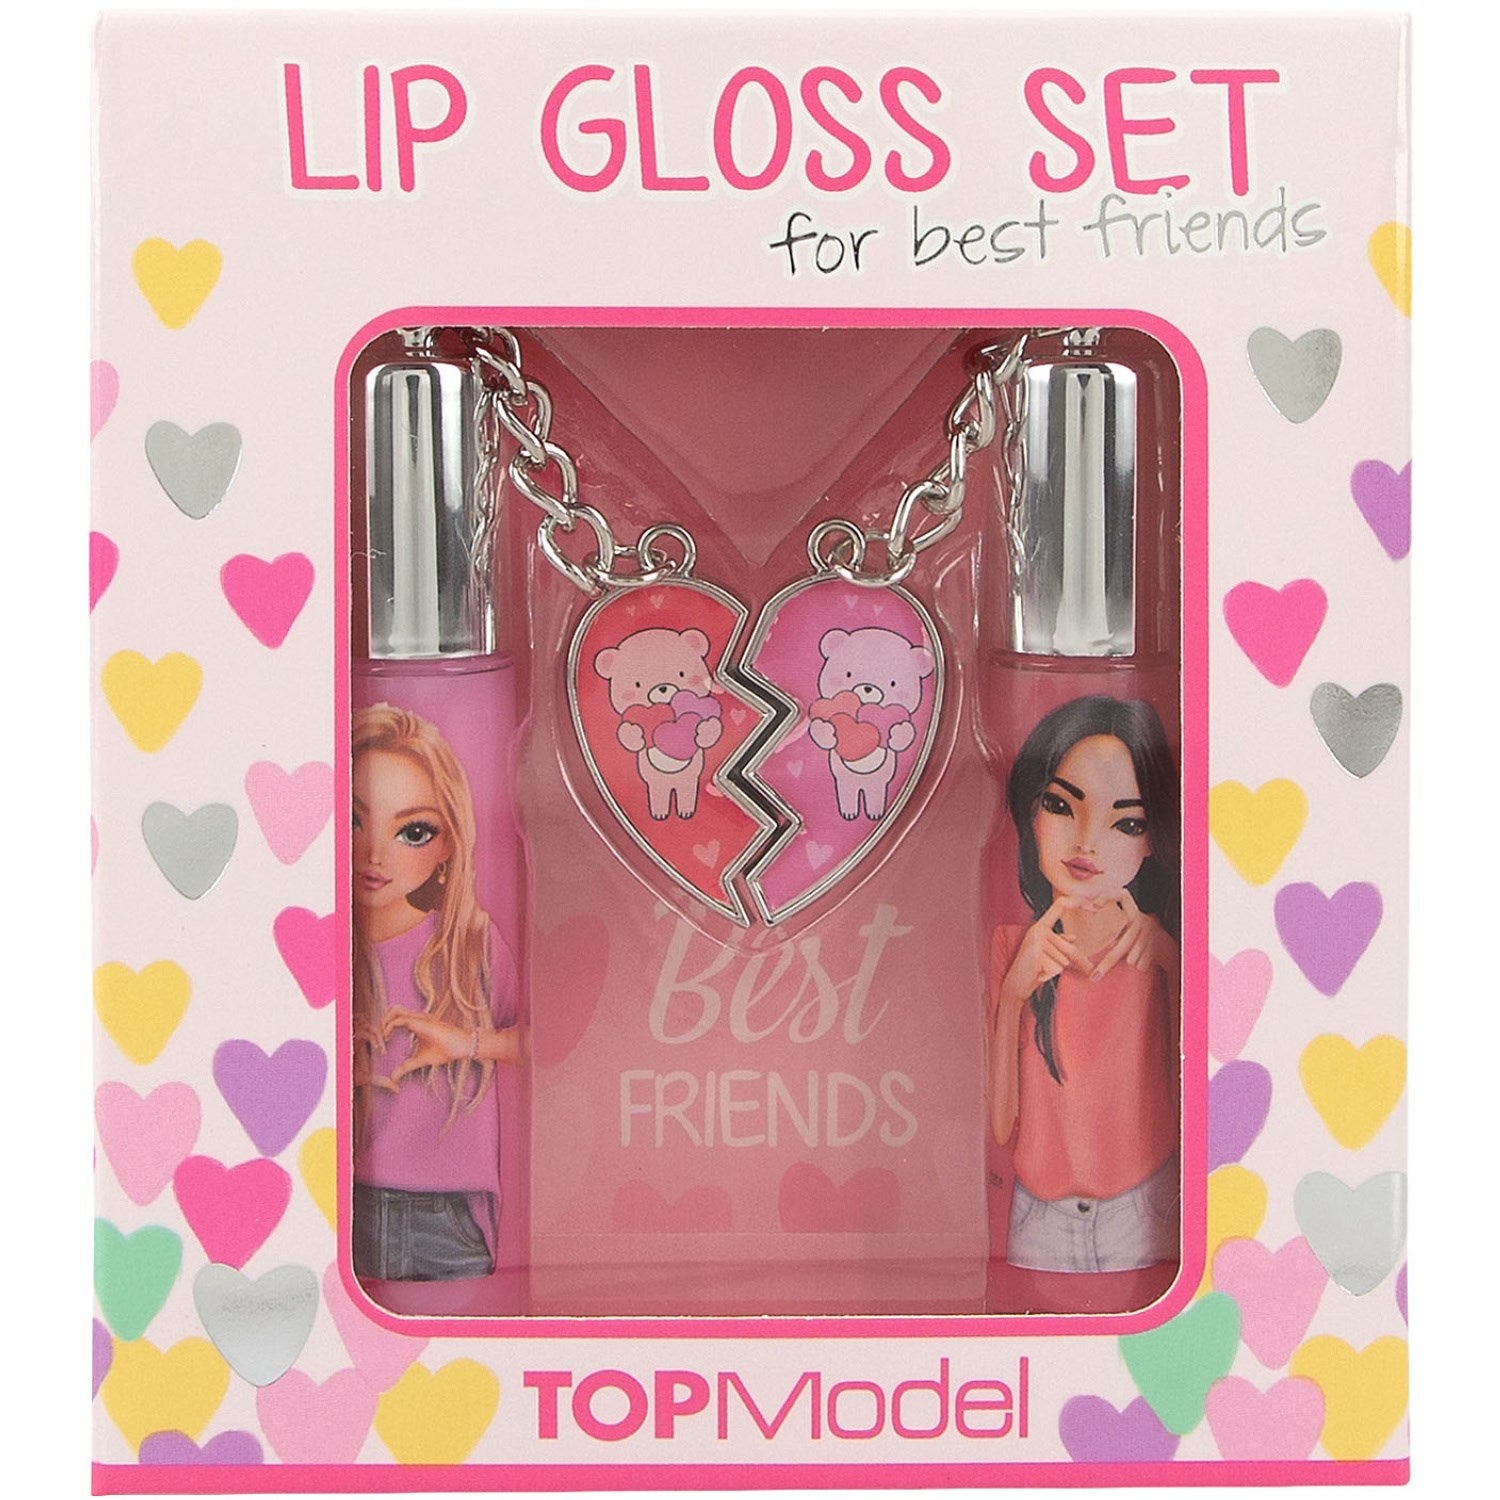 TOPModel Lip Gloss Set Bff Best Friends 4